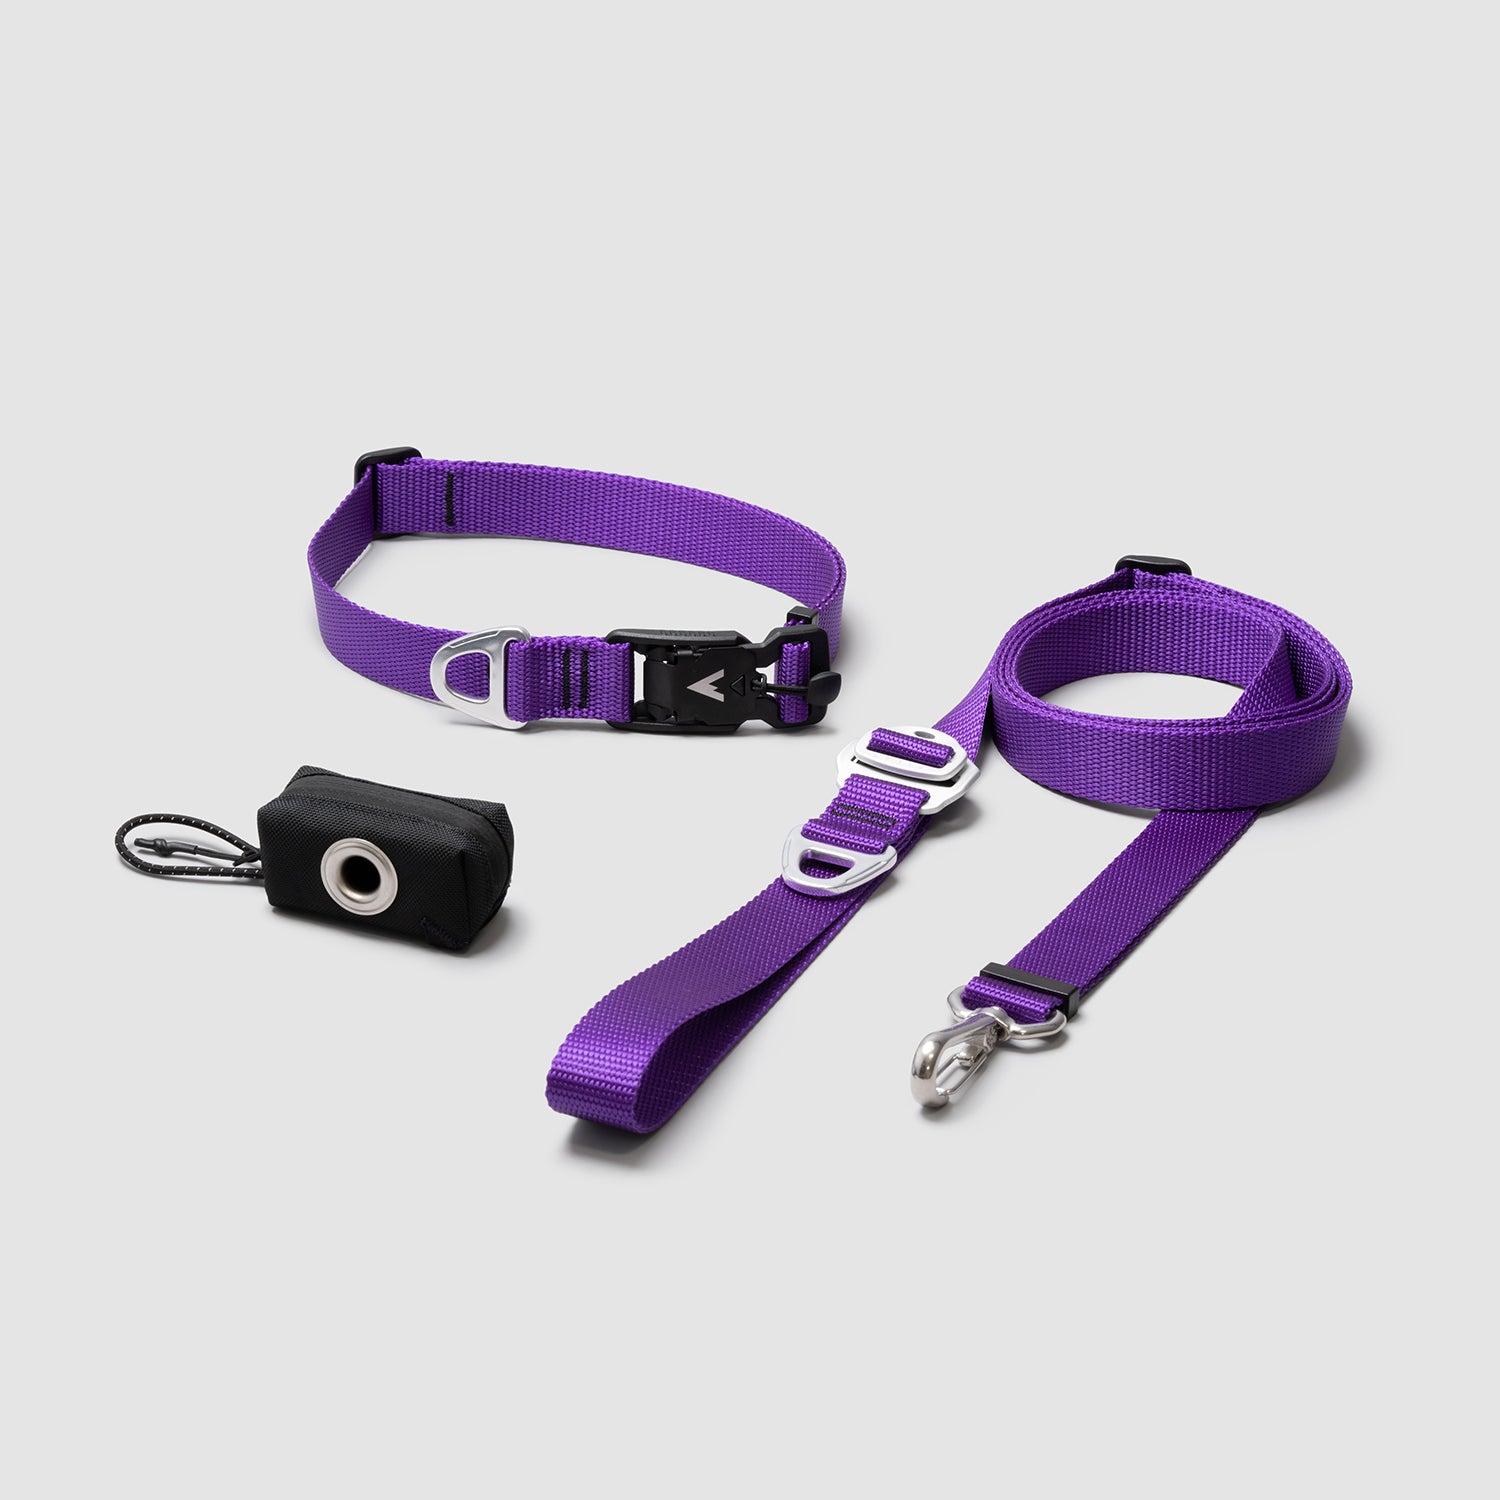 atlas pet company lifetime lite kit with lifetime warranty adjustable dog leash collar and pouch --violet